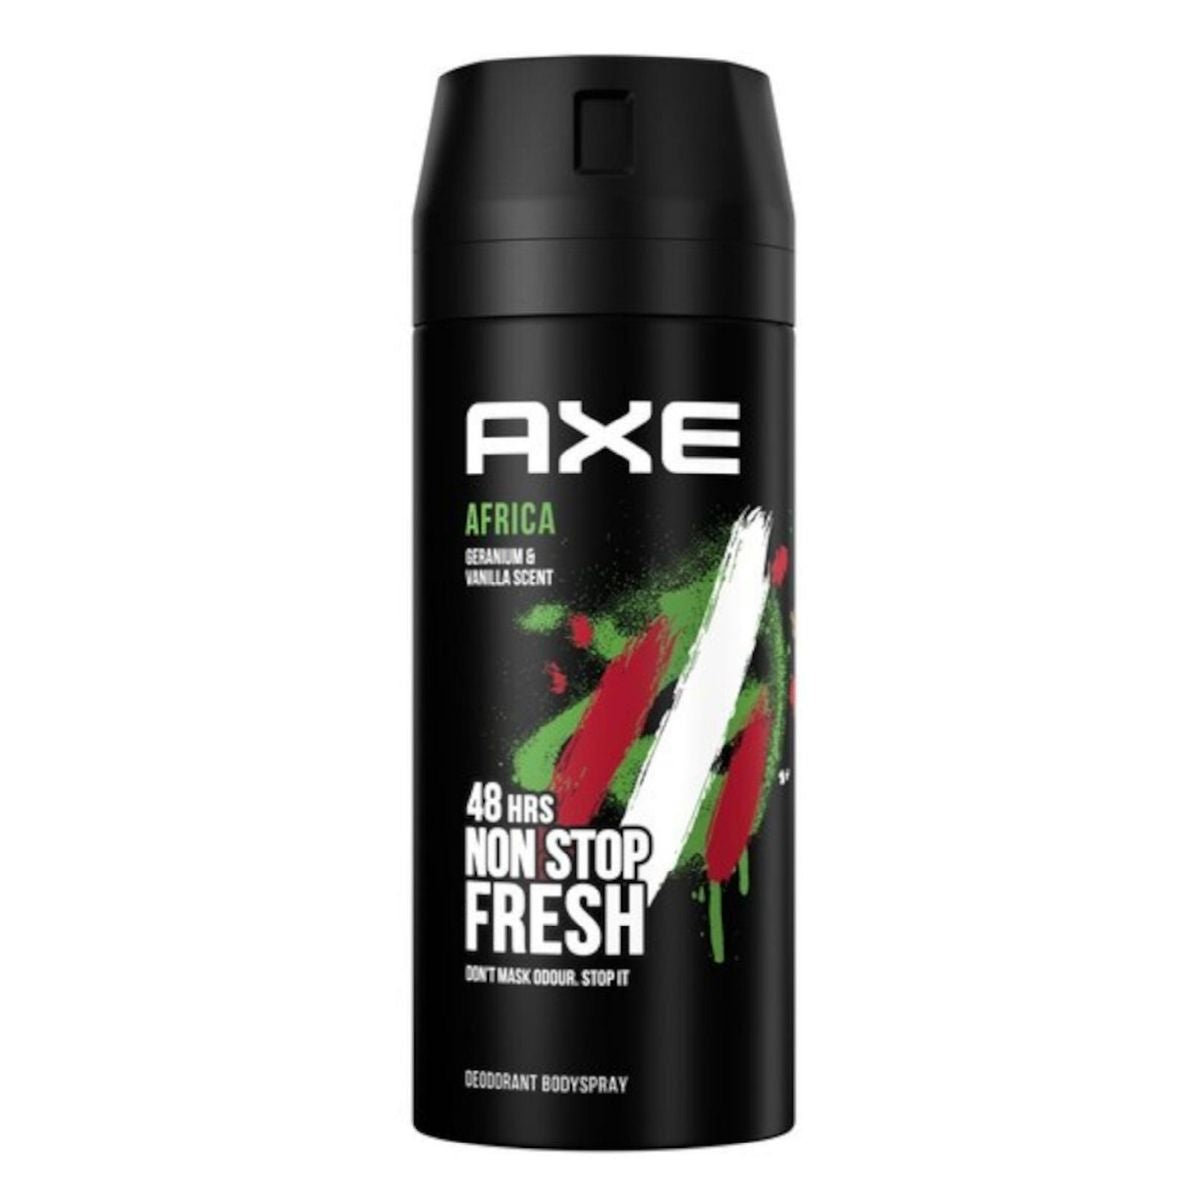 Axe Deodorant Bodyspray Africa Geranium & Vanilla Scent.